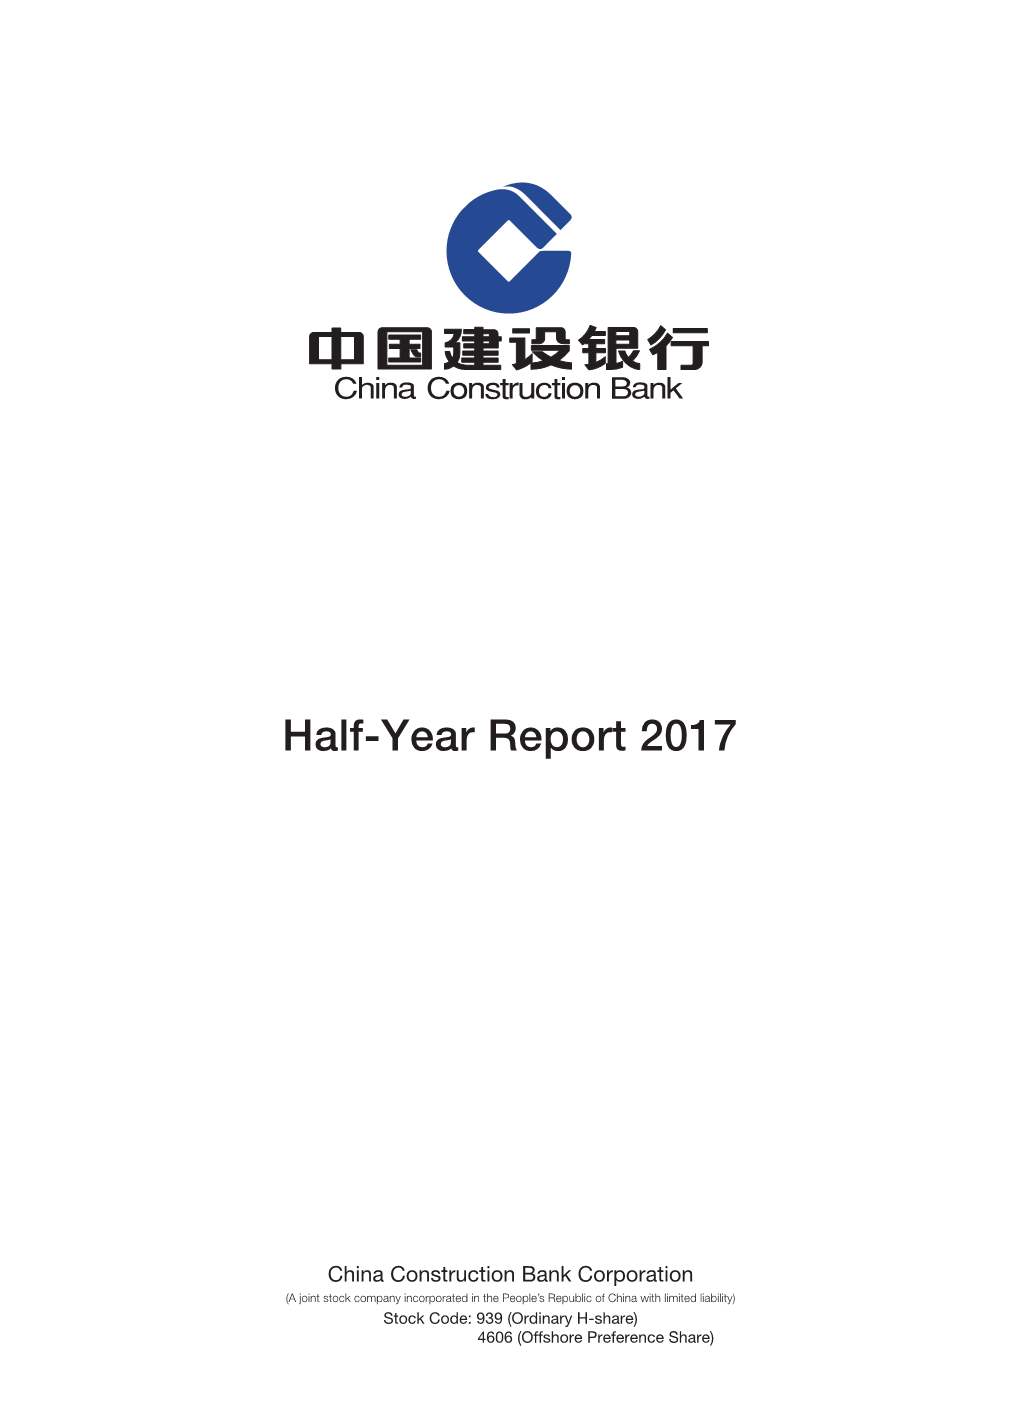 Half-Year Report 2017